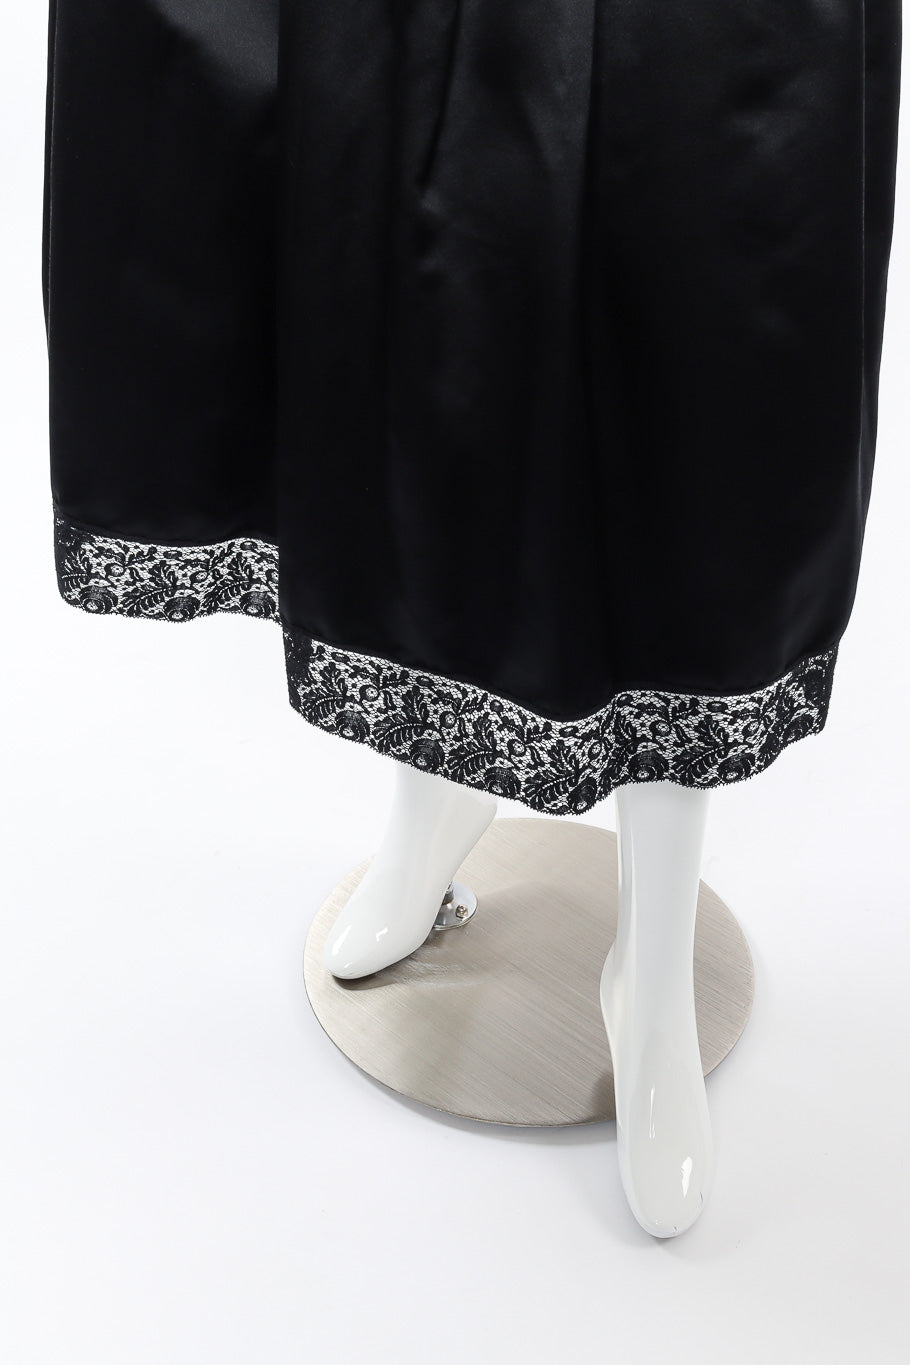 Valentino ruffle lace tiered skirt on mannequin bottom hem @recessla